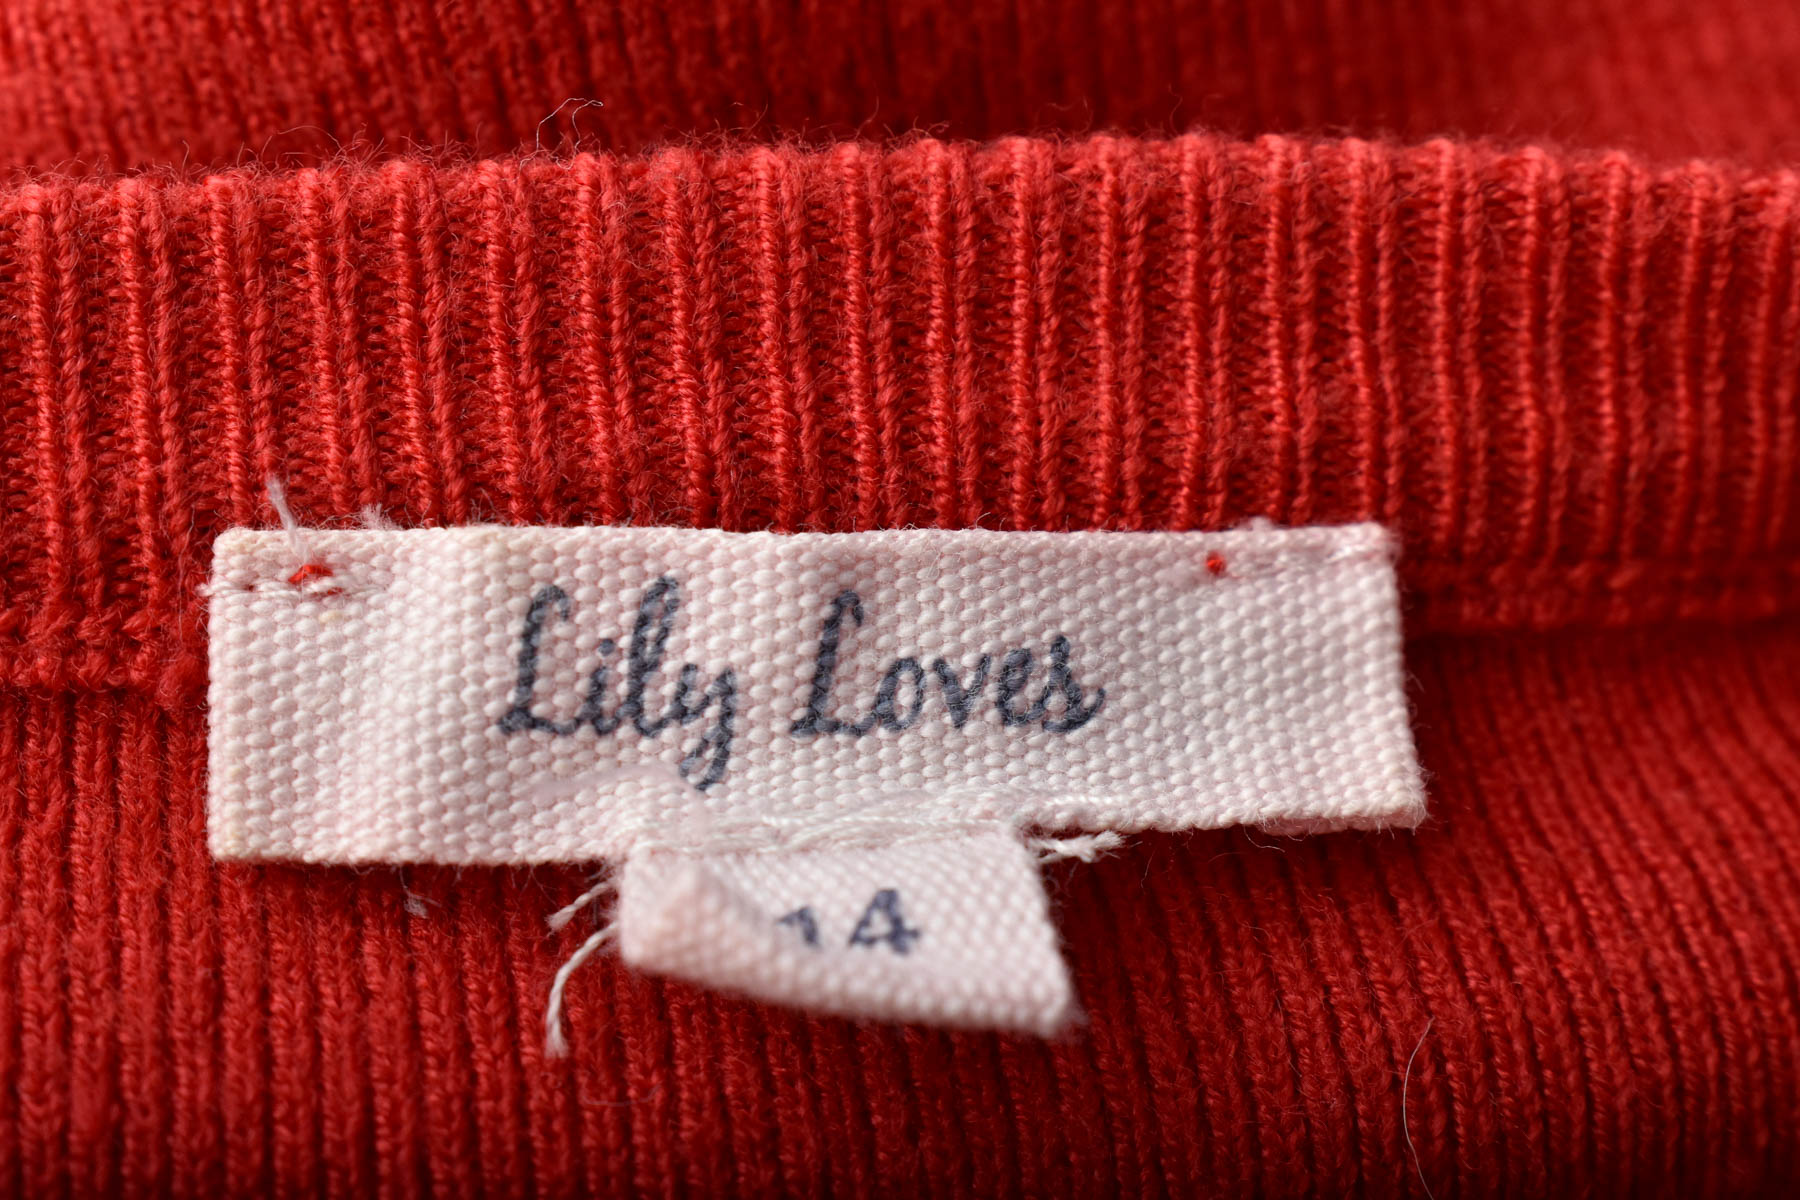 Pulover de damă - Lily Loves - 2